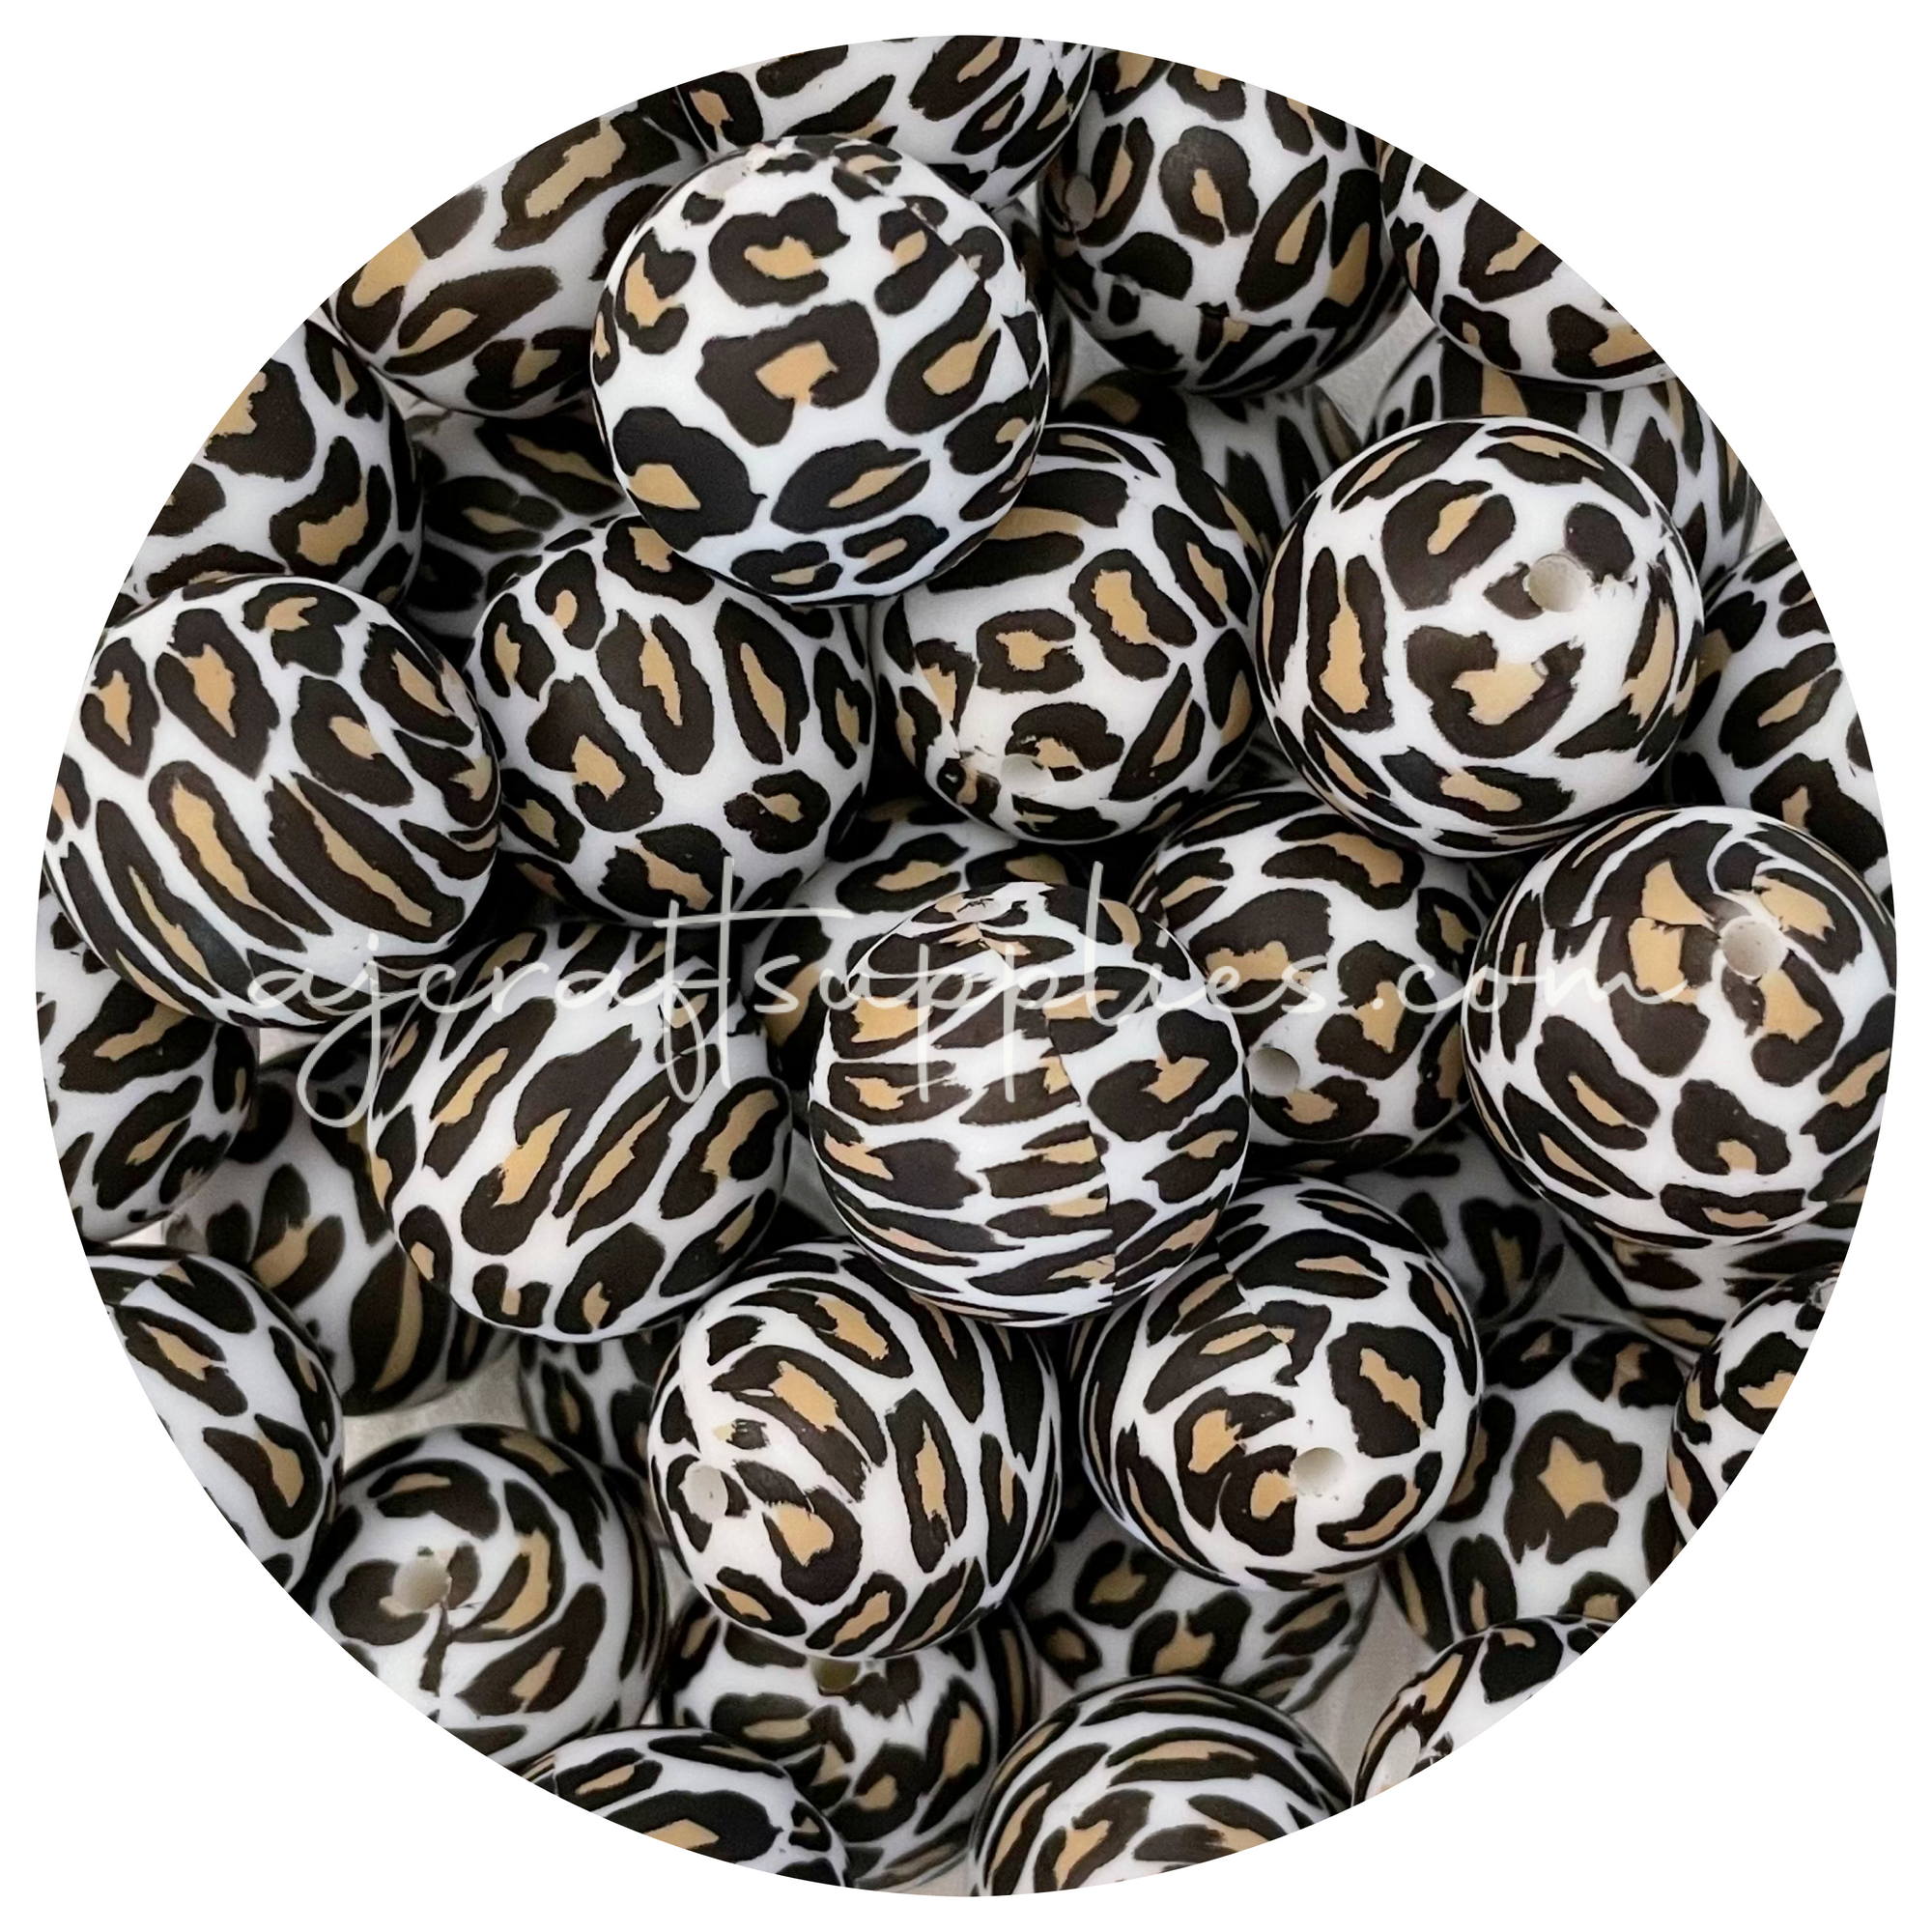 Snow Leopard - 19mm round - 5 Beads